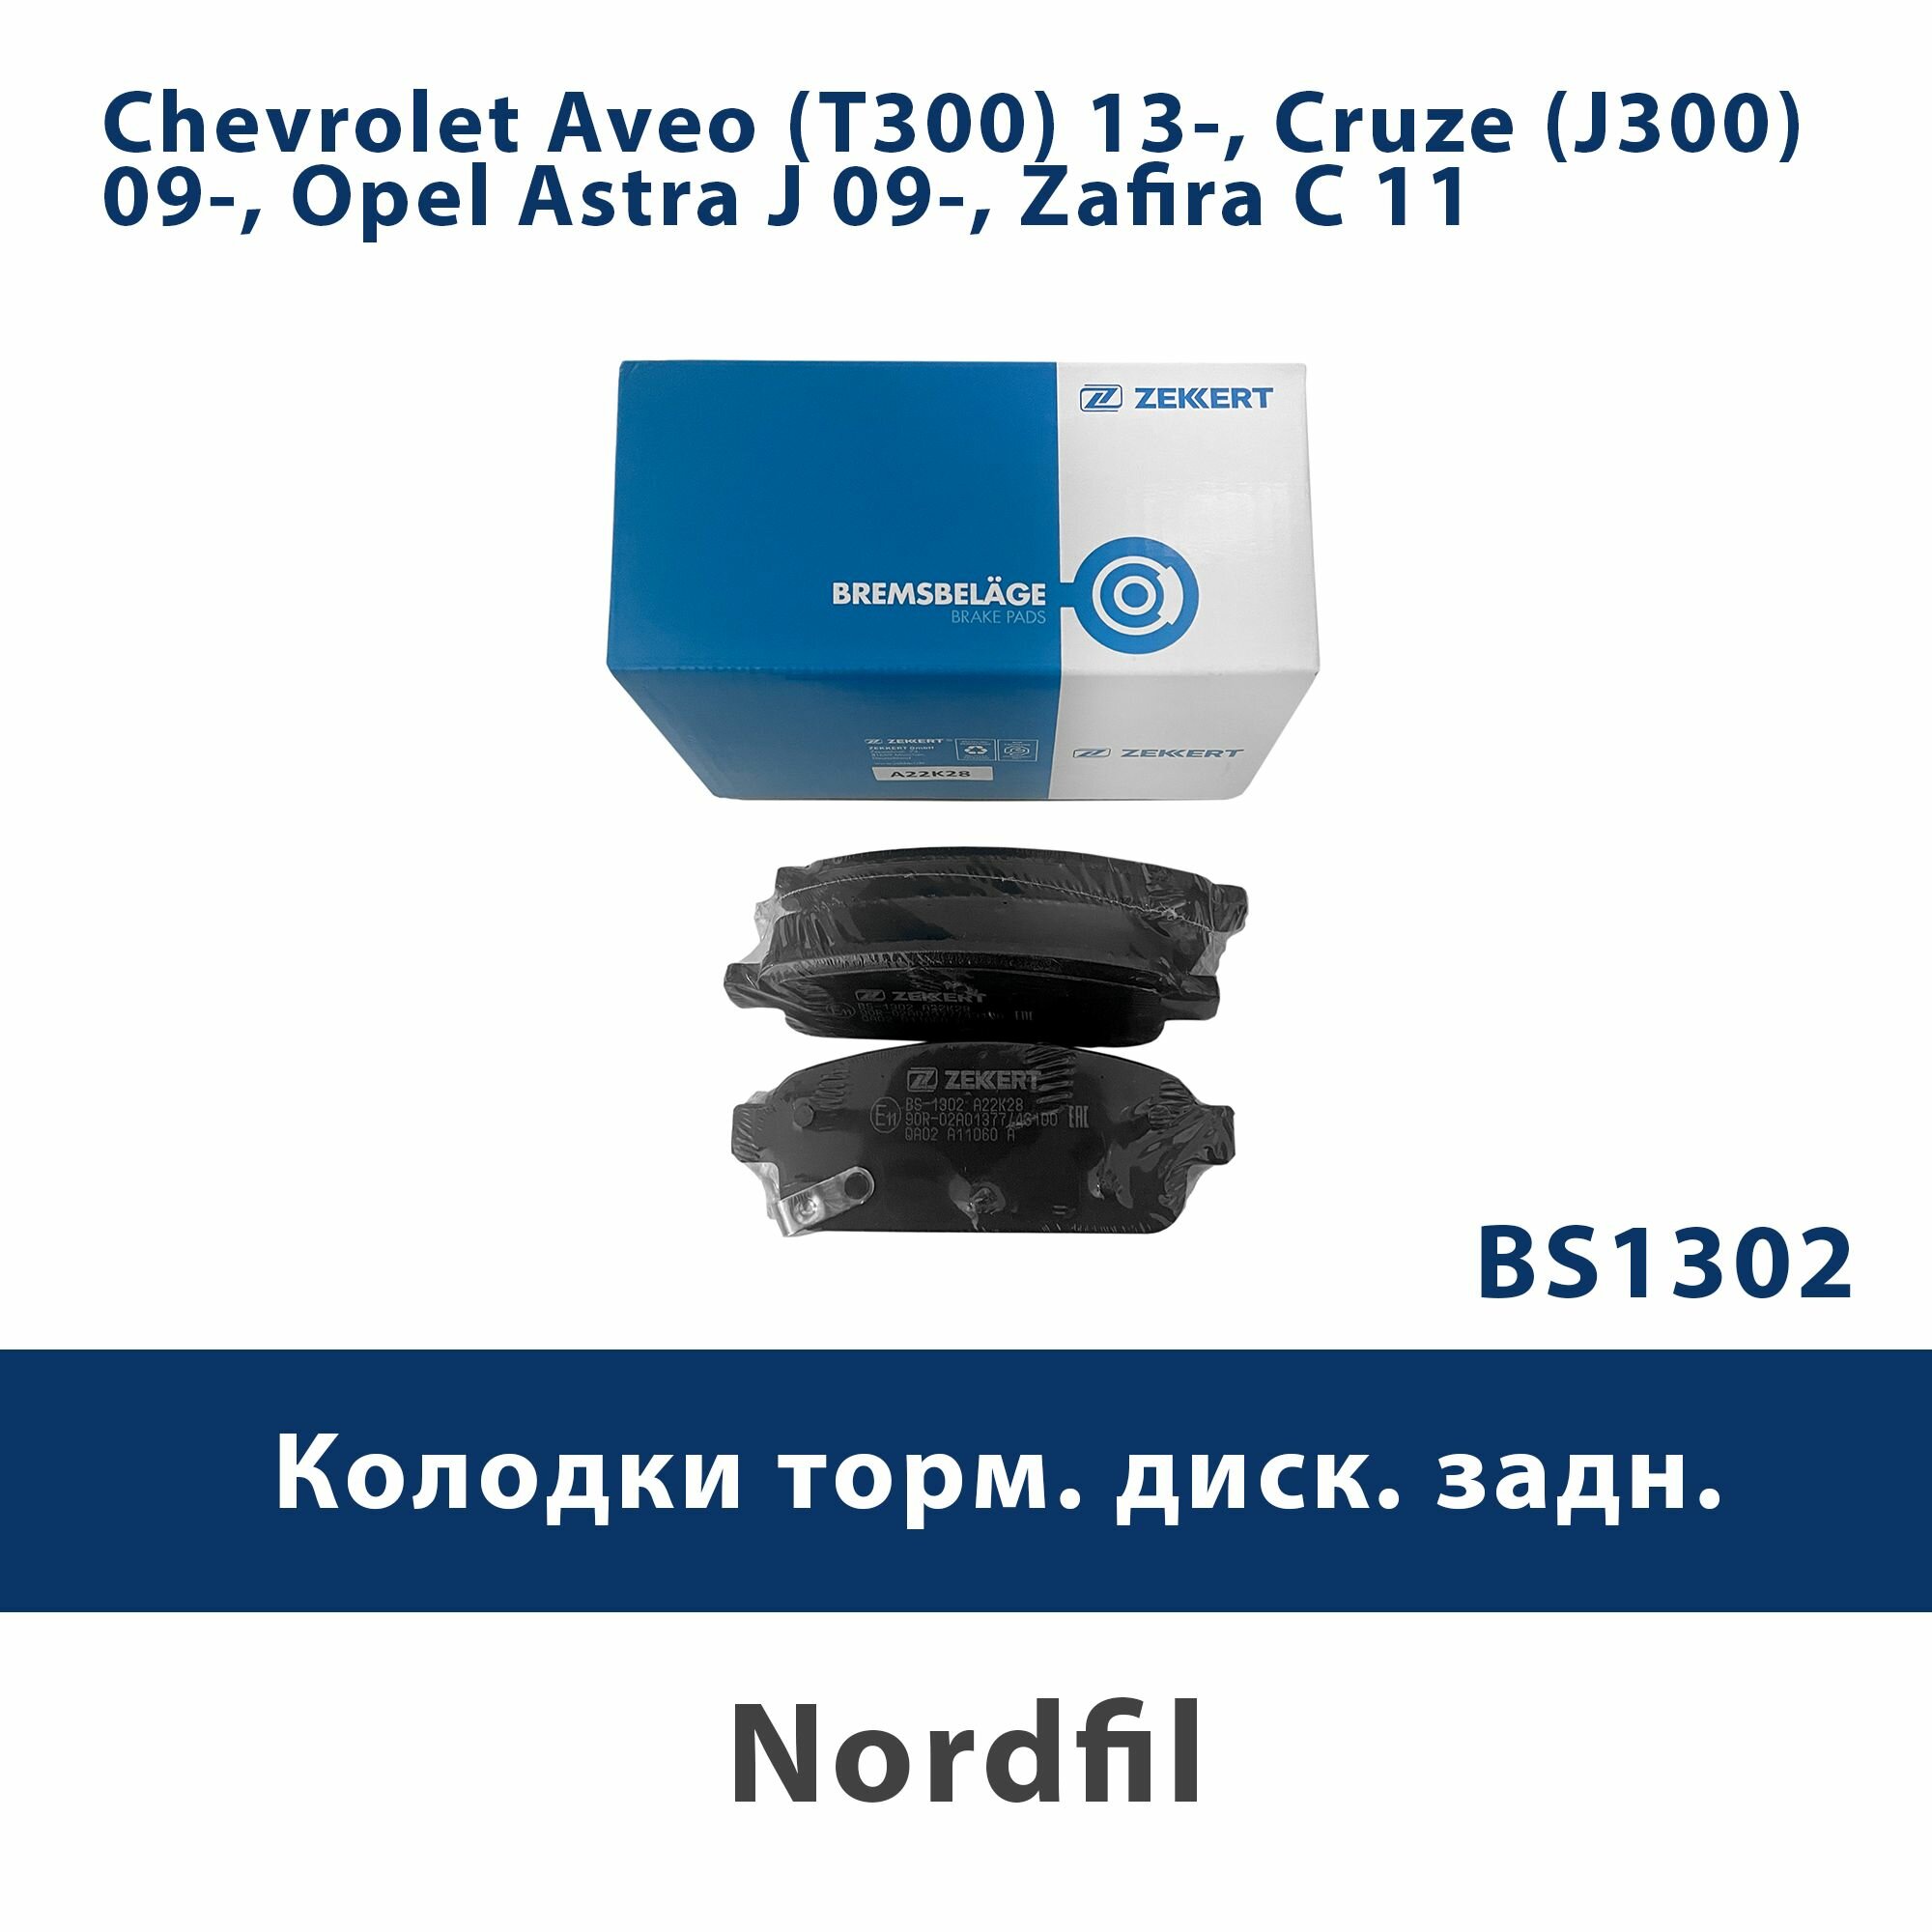 Колодки торм. диск. задн. Chevrolet Aveo (T300) 13-, Cruze (J300) 09-, Opel Astra J 09-, Zafira C 11 - Zekkert bs1302